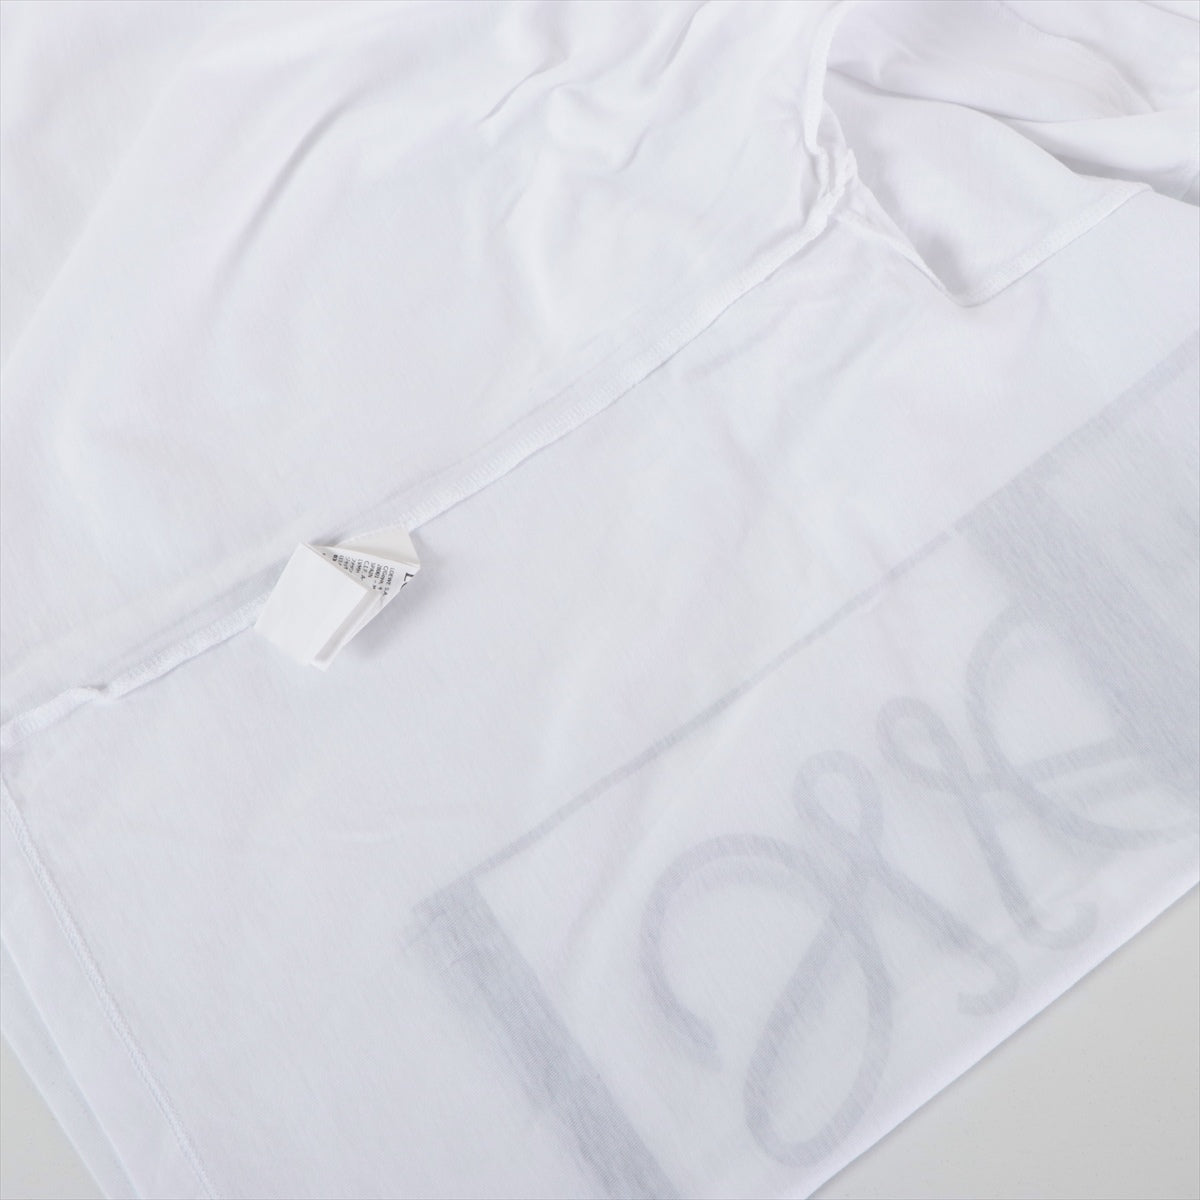 Loewe Anagram 23AW Cotton & polyurethane T-shirt L Ladies' White  S359Y22X44